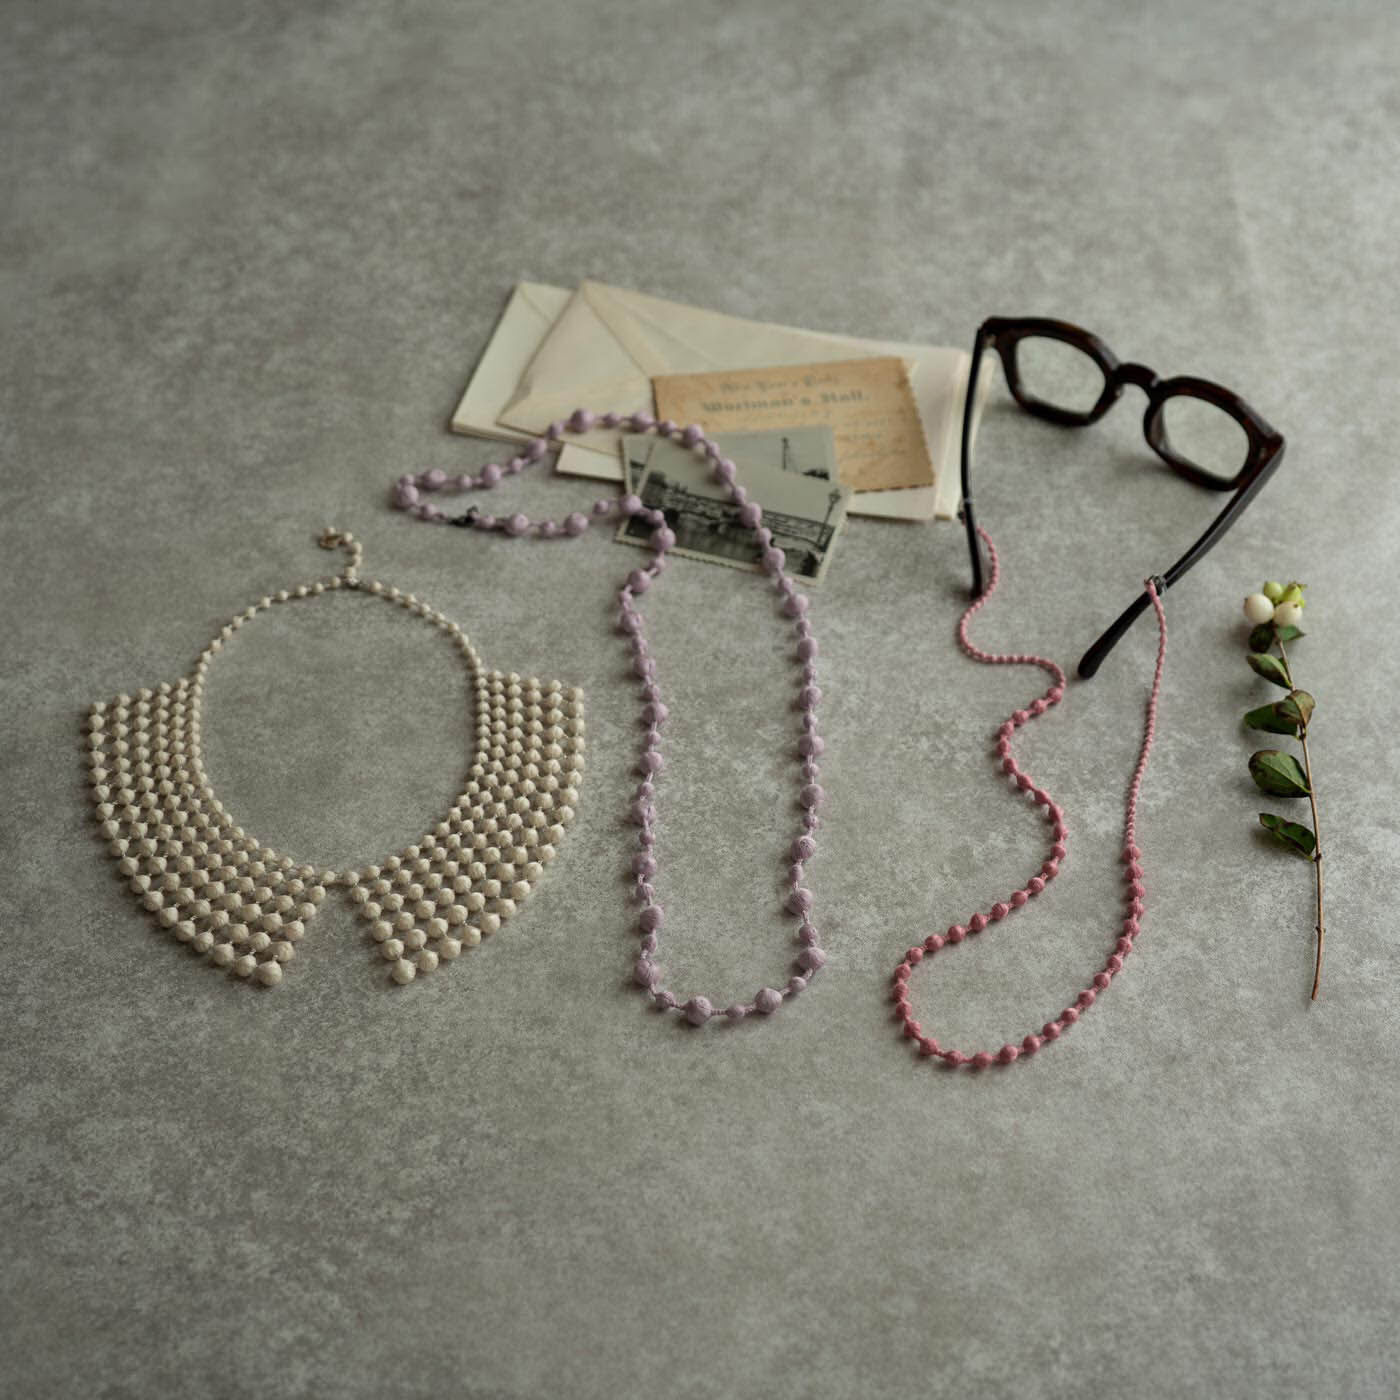 ＆Stories|群馬の刺繍工房が作った 糸の宝石の衿飾りネックレス〈アイボリー×シルバー〉|日本職人プロジェクトでは初登場の〈000 /トリプル・オゥ〉の美しい糸の宝石たち。あなたをいっそう輝かせる逸品を是非見つけてみて。